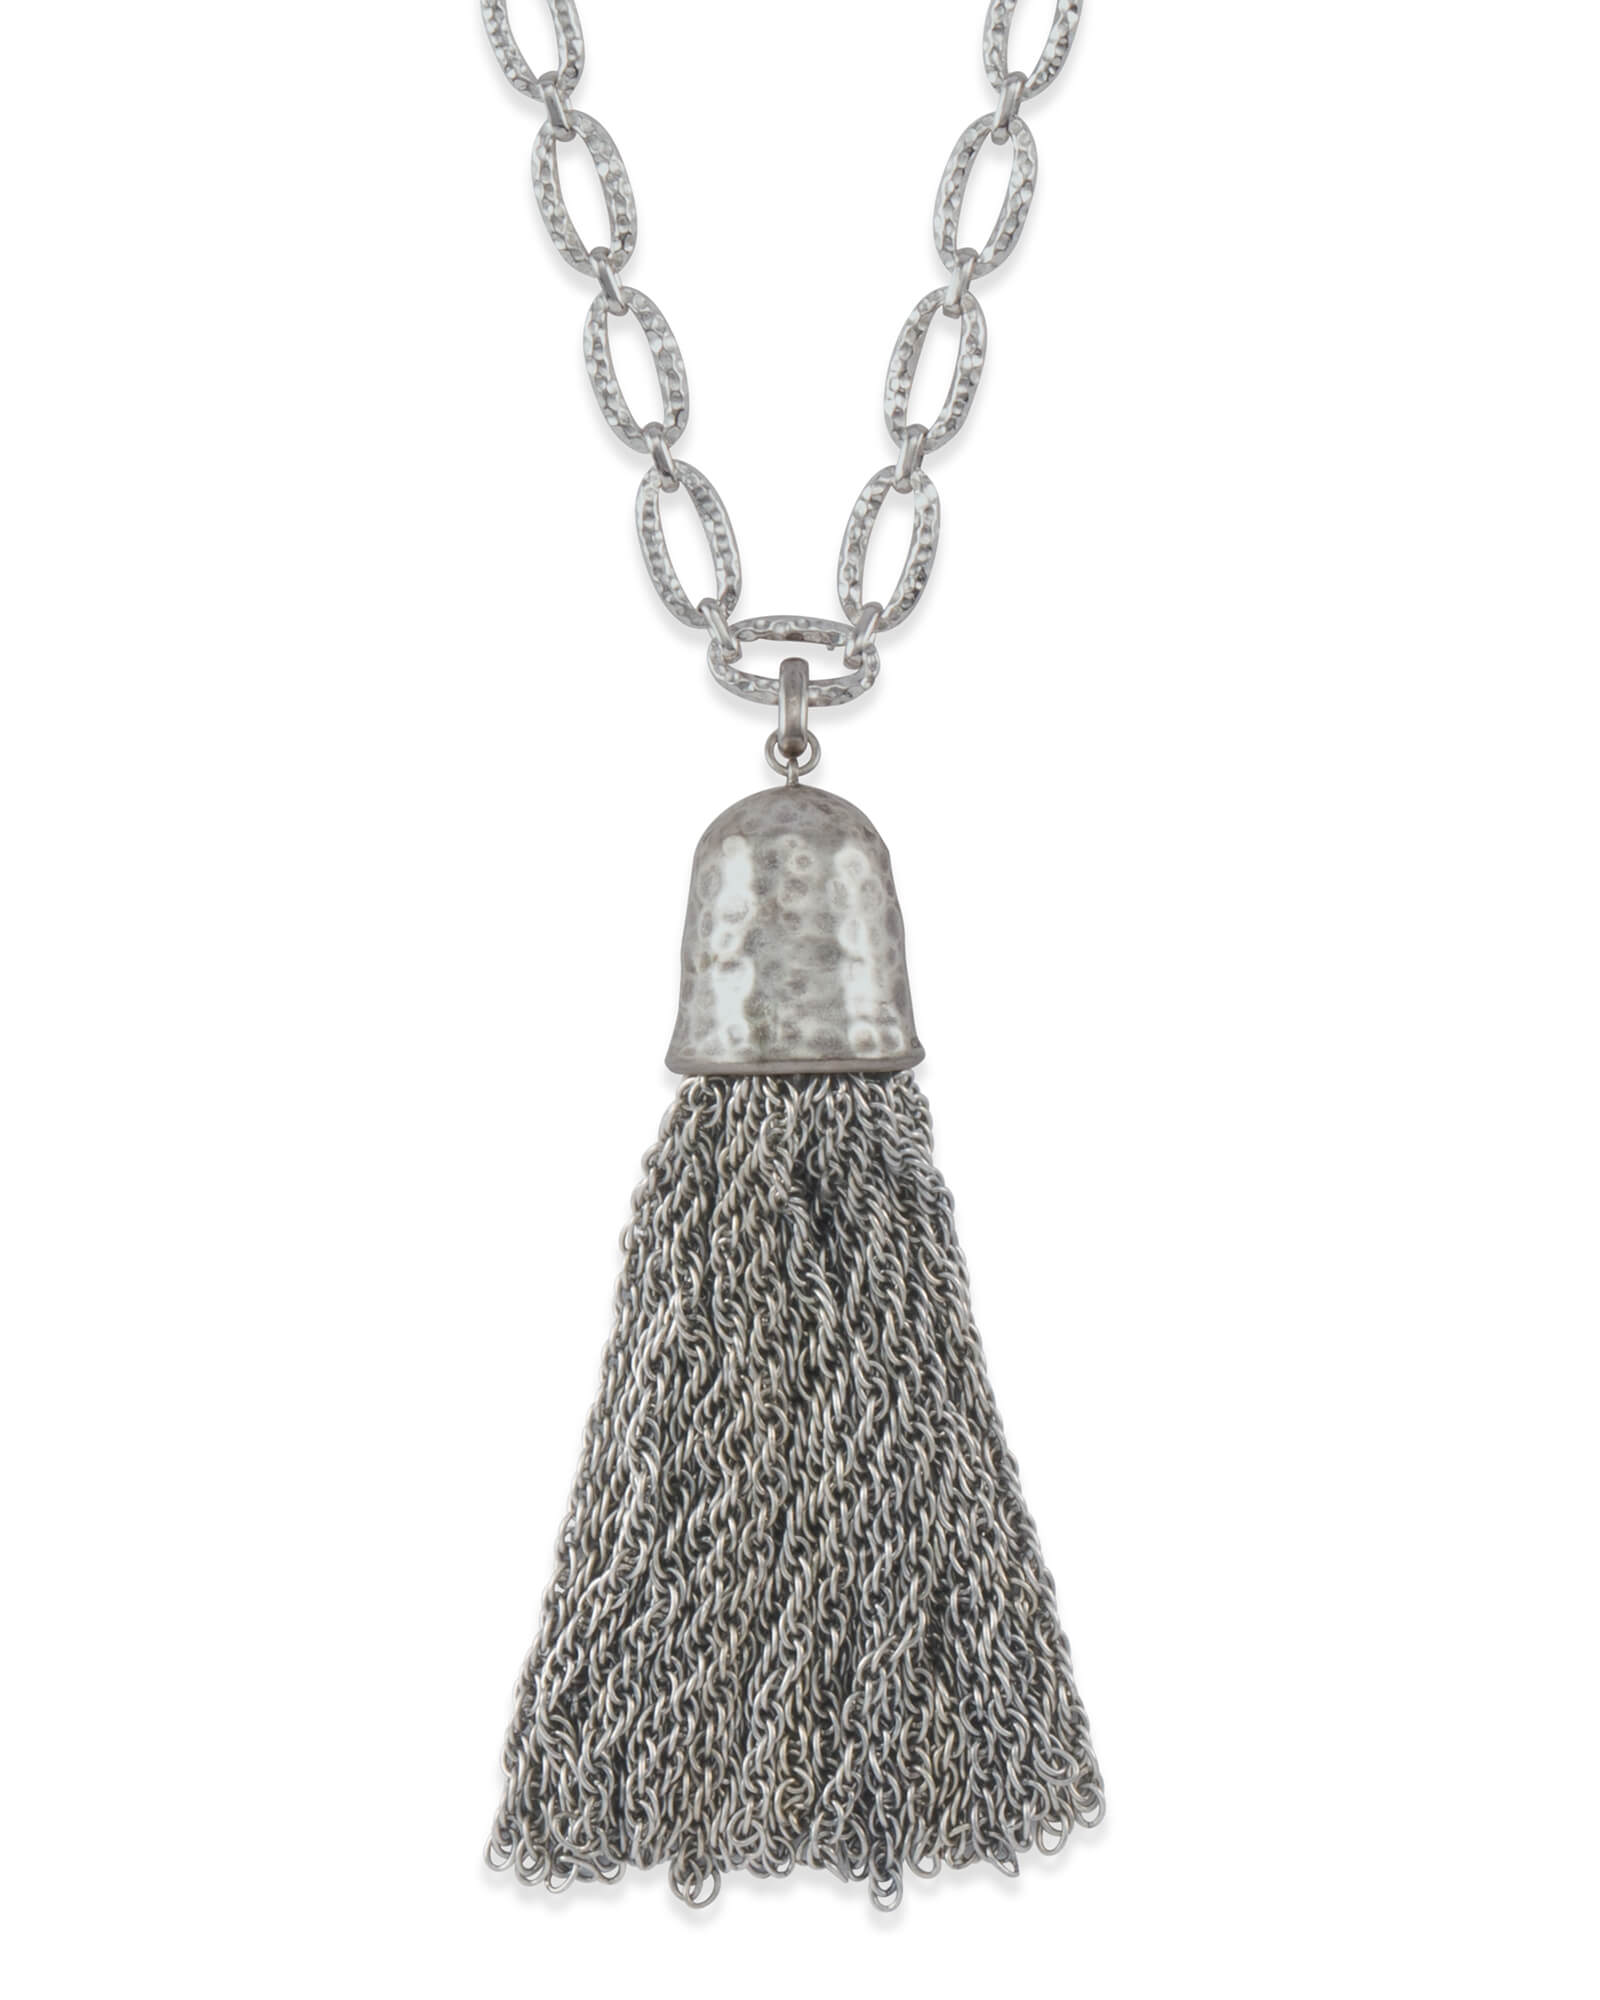 Tassel Charm Necklace Set in Vintage Silver | Kendra Scott